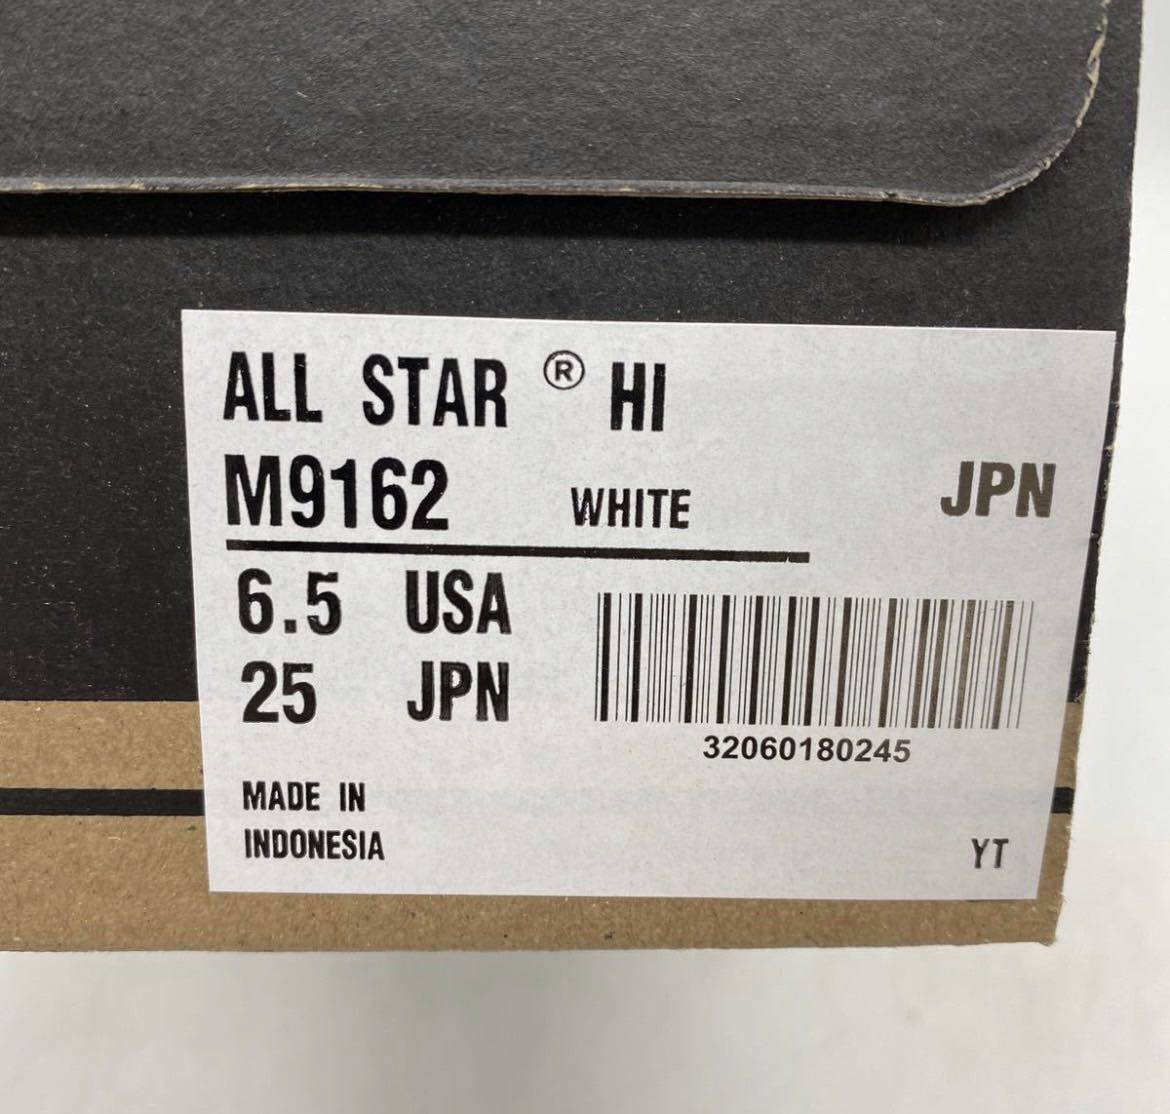 【25cm】新品 CONVERSE ALL STAR HI WHITE コンバース オールスター ハイカット ホワイト インドネシア製 (M9162) 2341_画像9